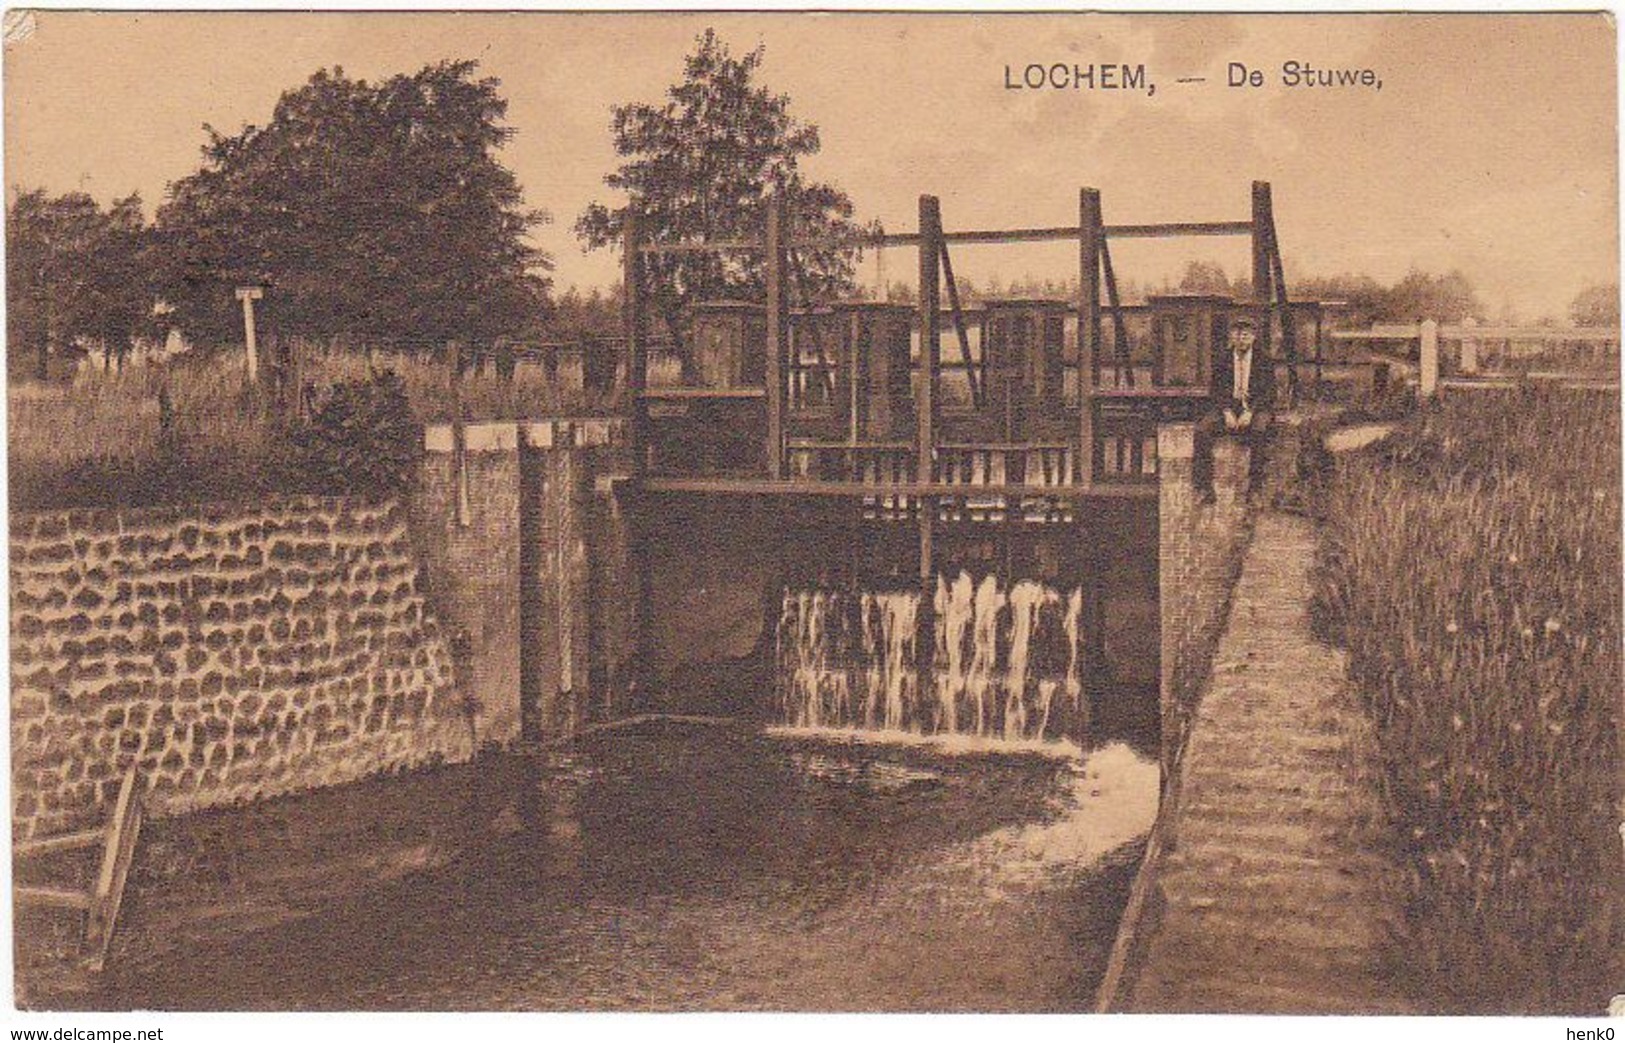 Lochem Berkel De Stuwe KH35 - Lochem